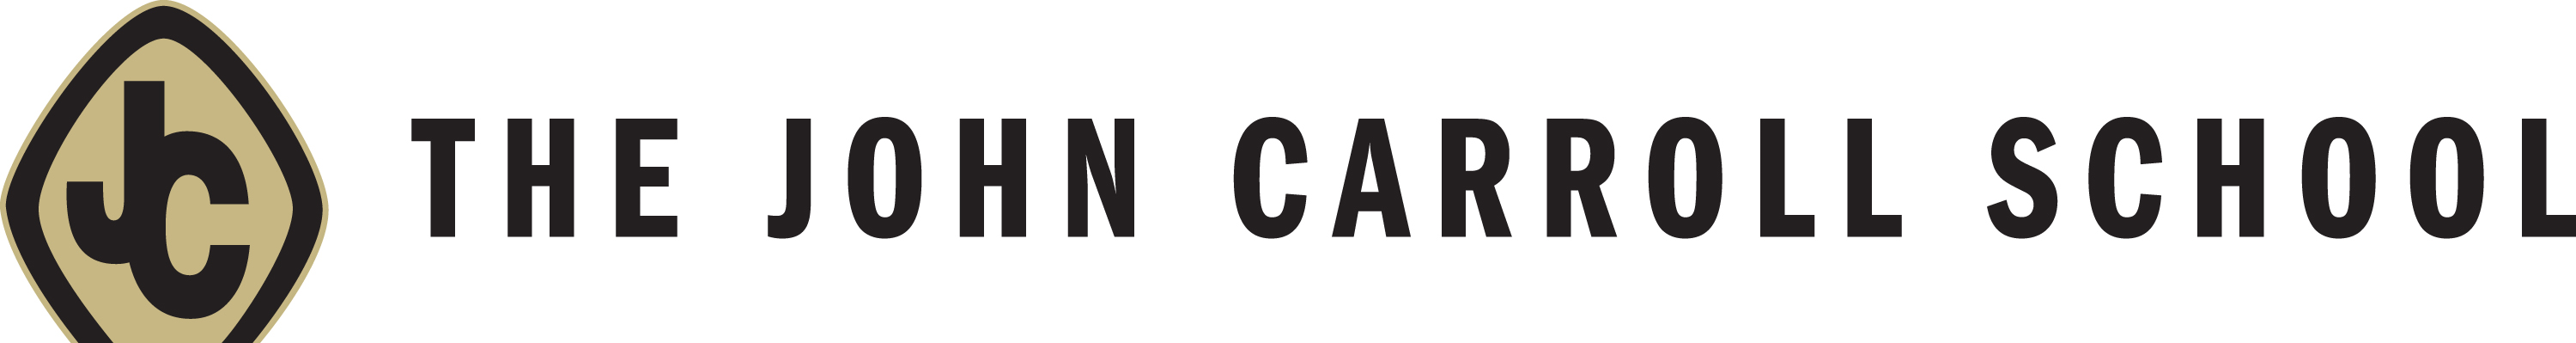 The John Carroll School logo